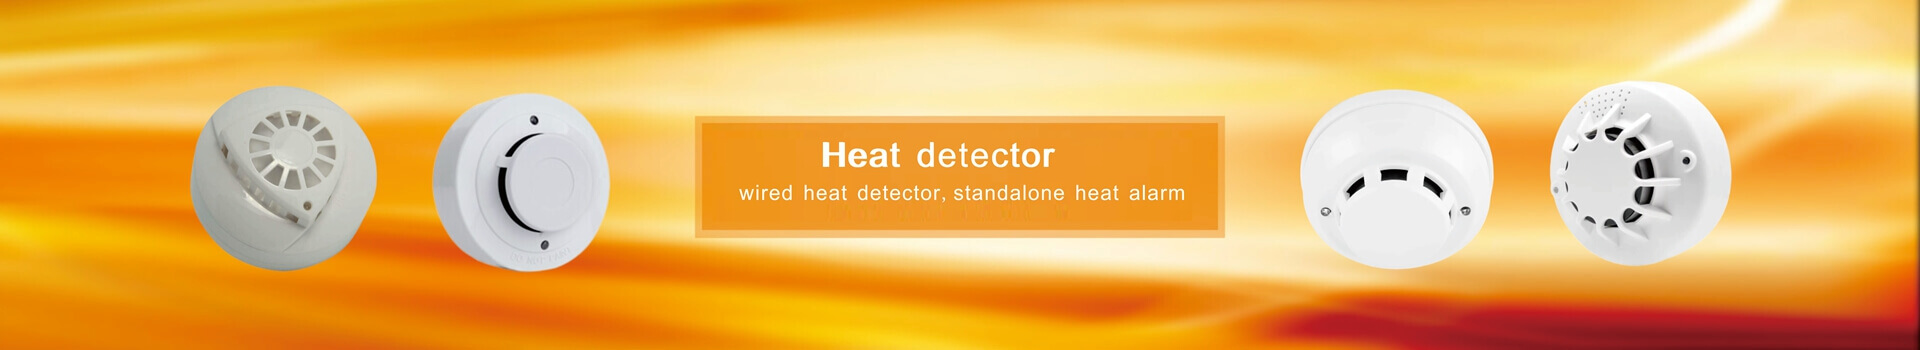 Standalone heat detector